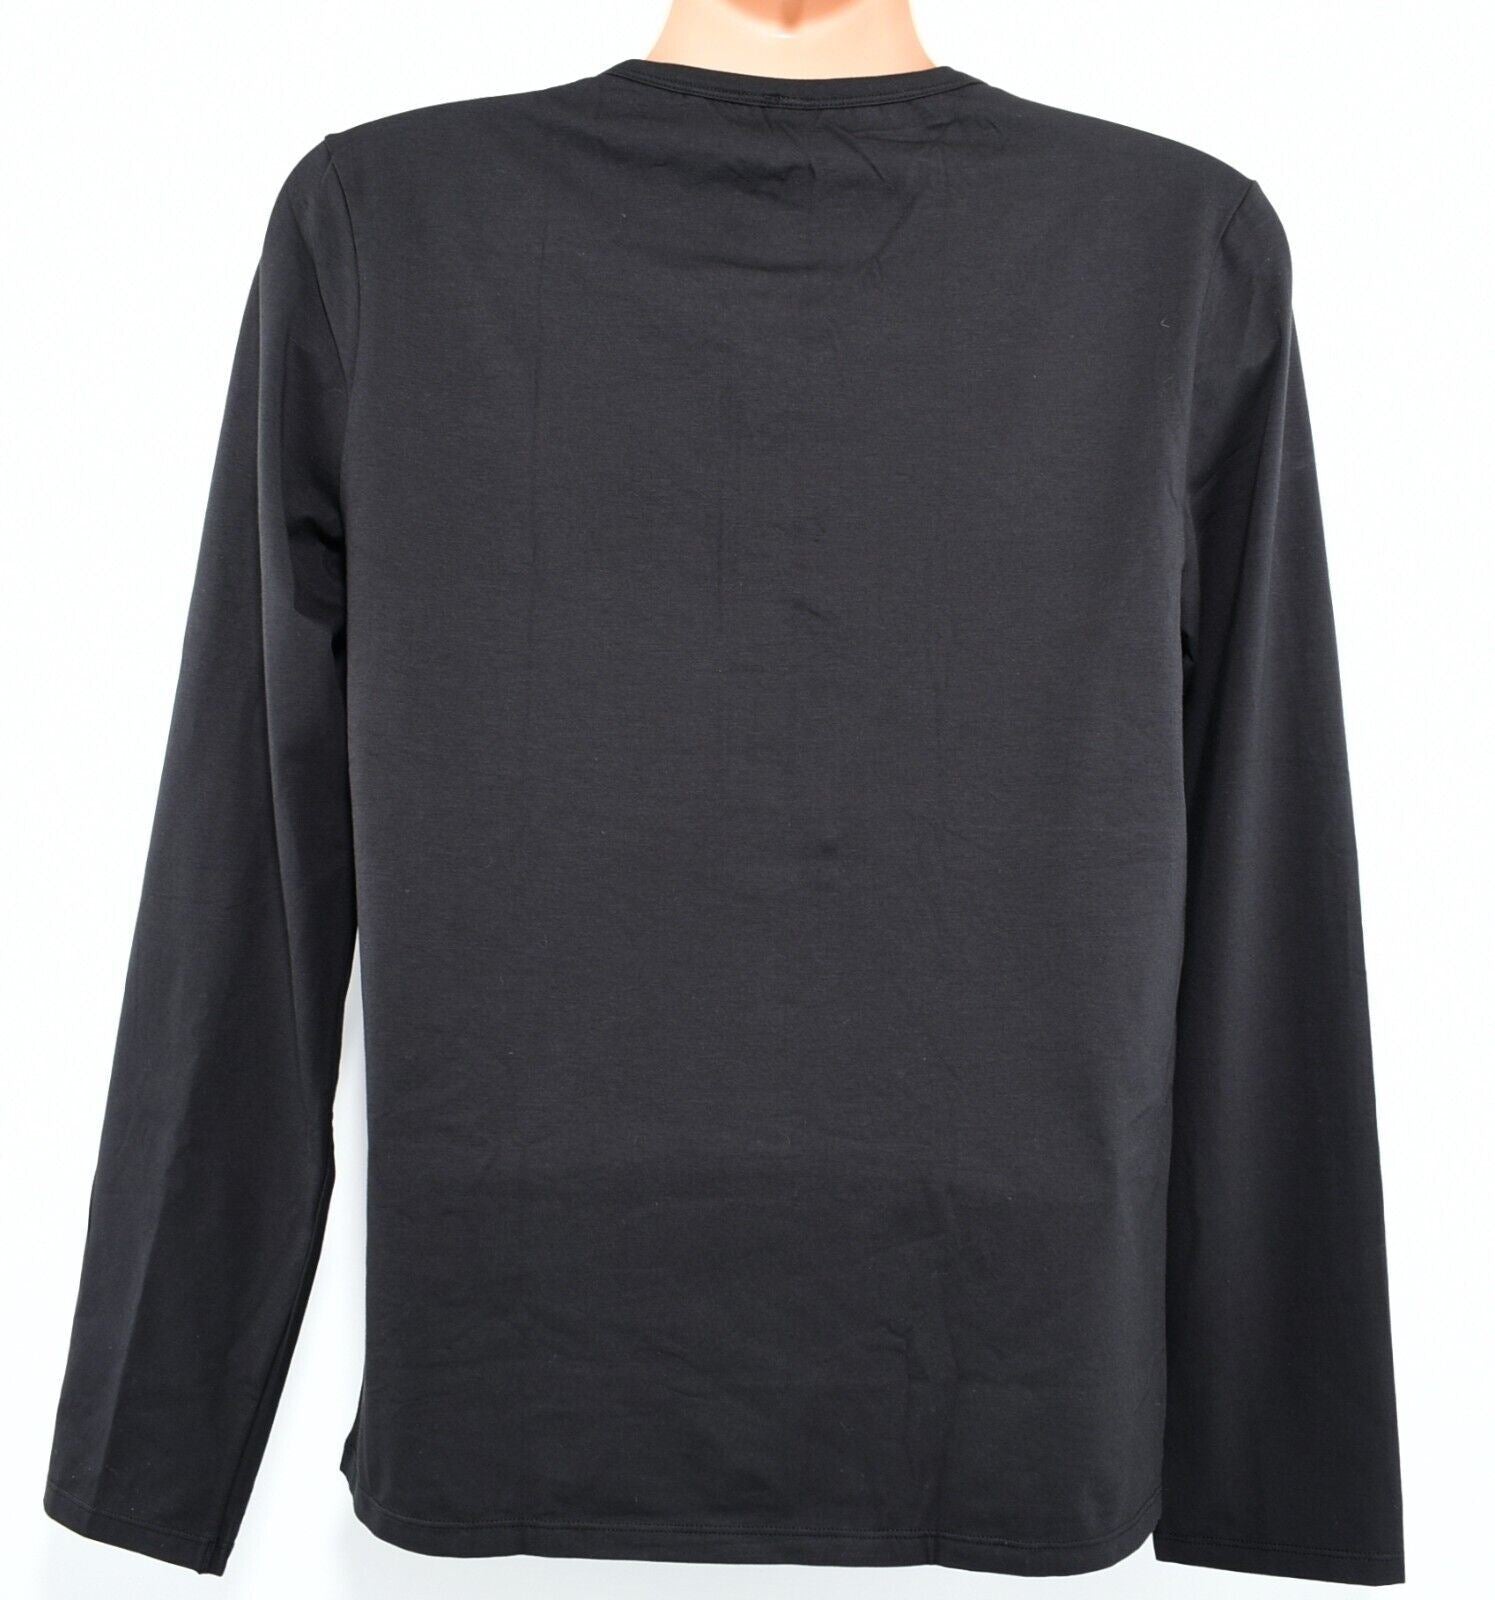 JOHN GALLIANO Underwear: Mens Long Sleeve Lounge T-shirt Top, Black, size MEDIUM